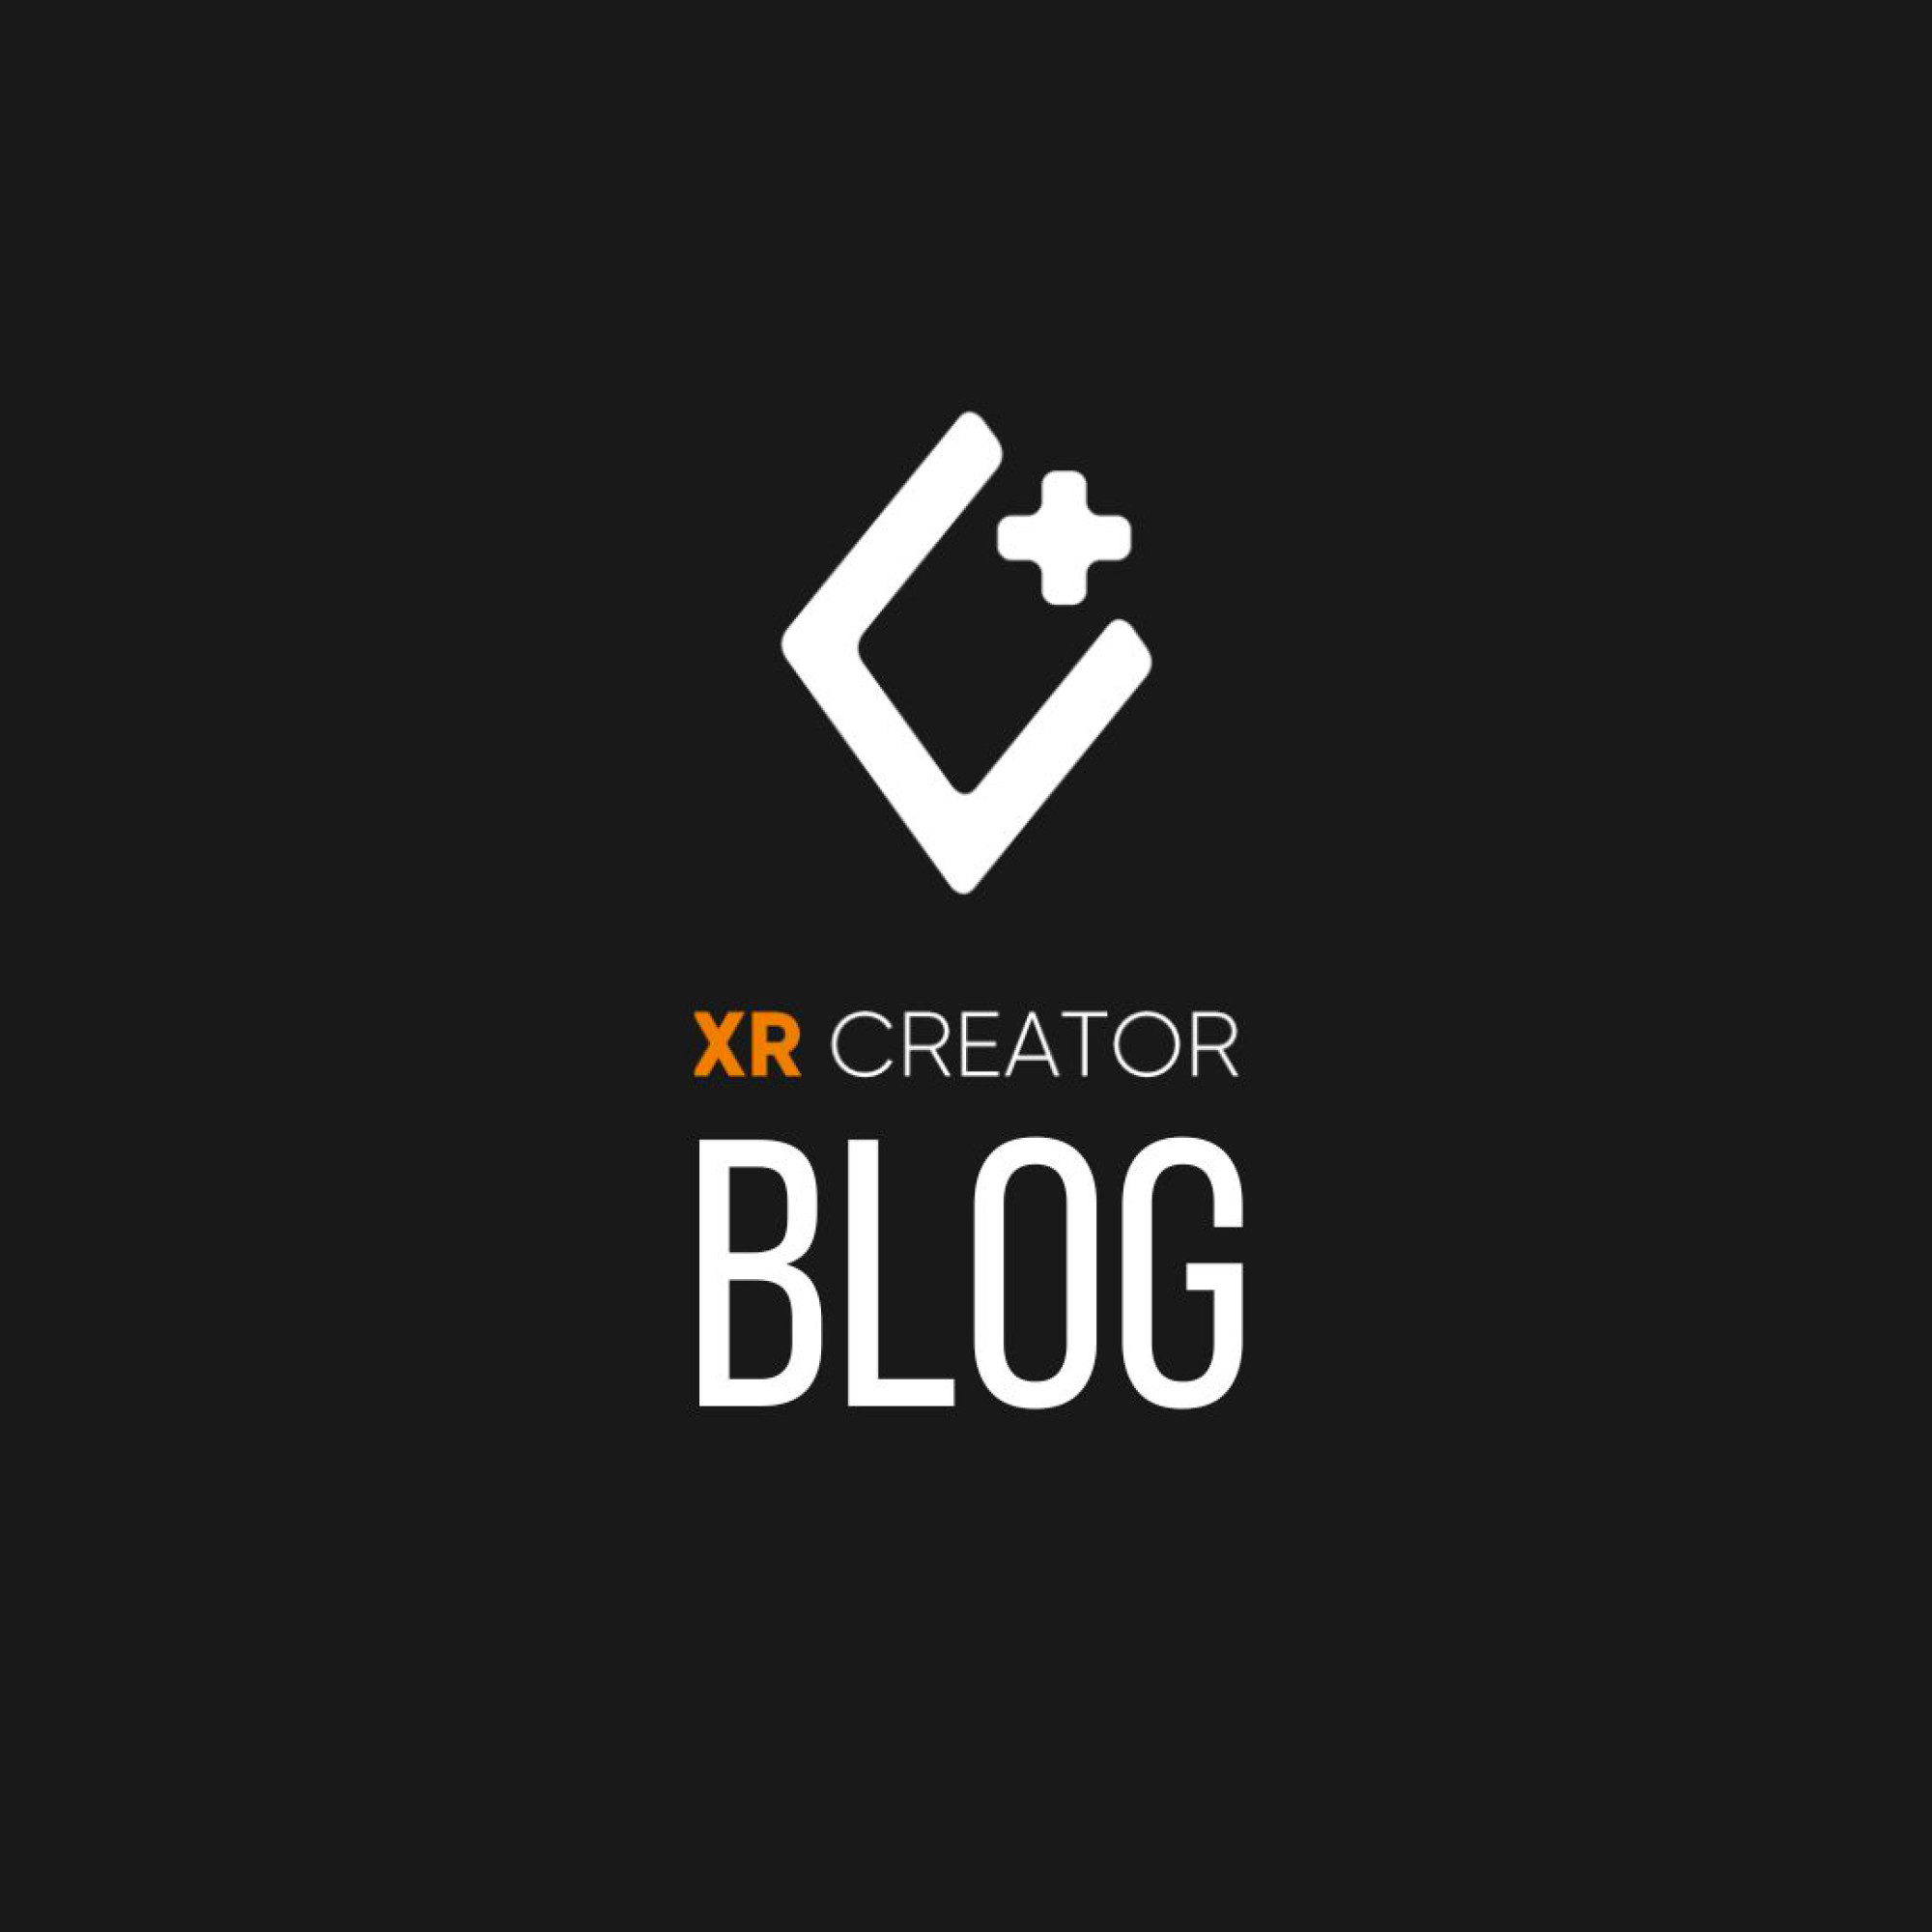 xrcreatorblog logo